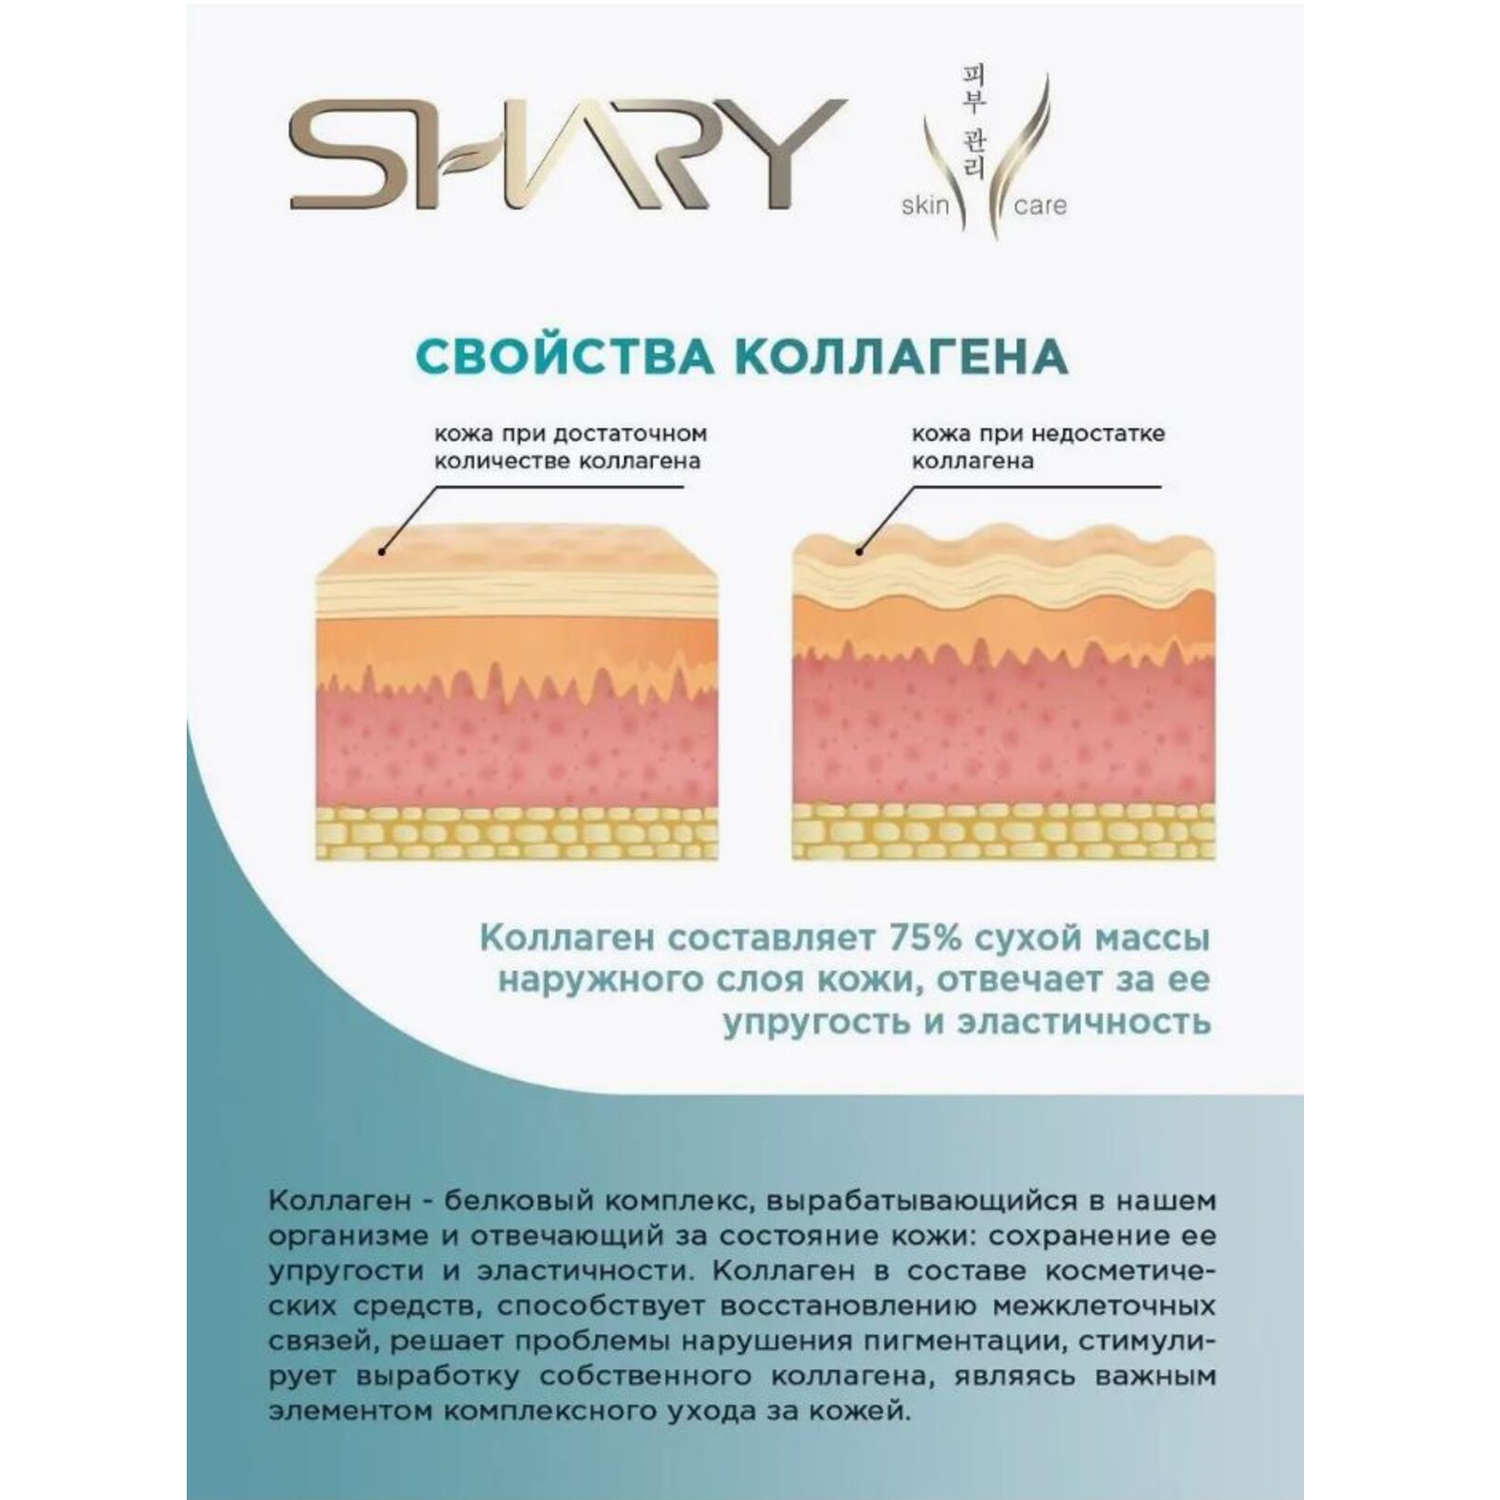 Набор коллагеновых сывороток SHARY для упругости и эластичности кожи 10 шт х 8 г - фото 5